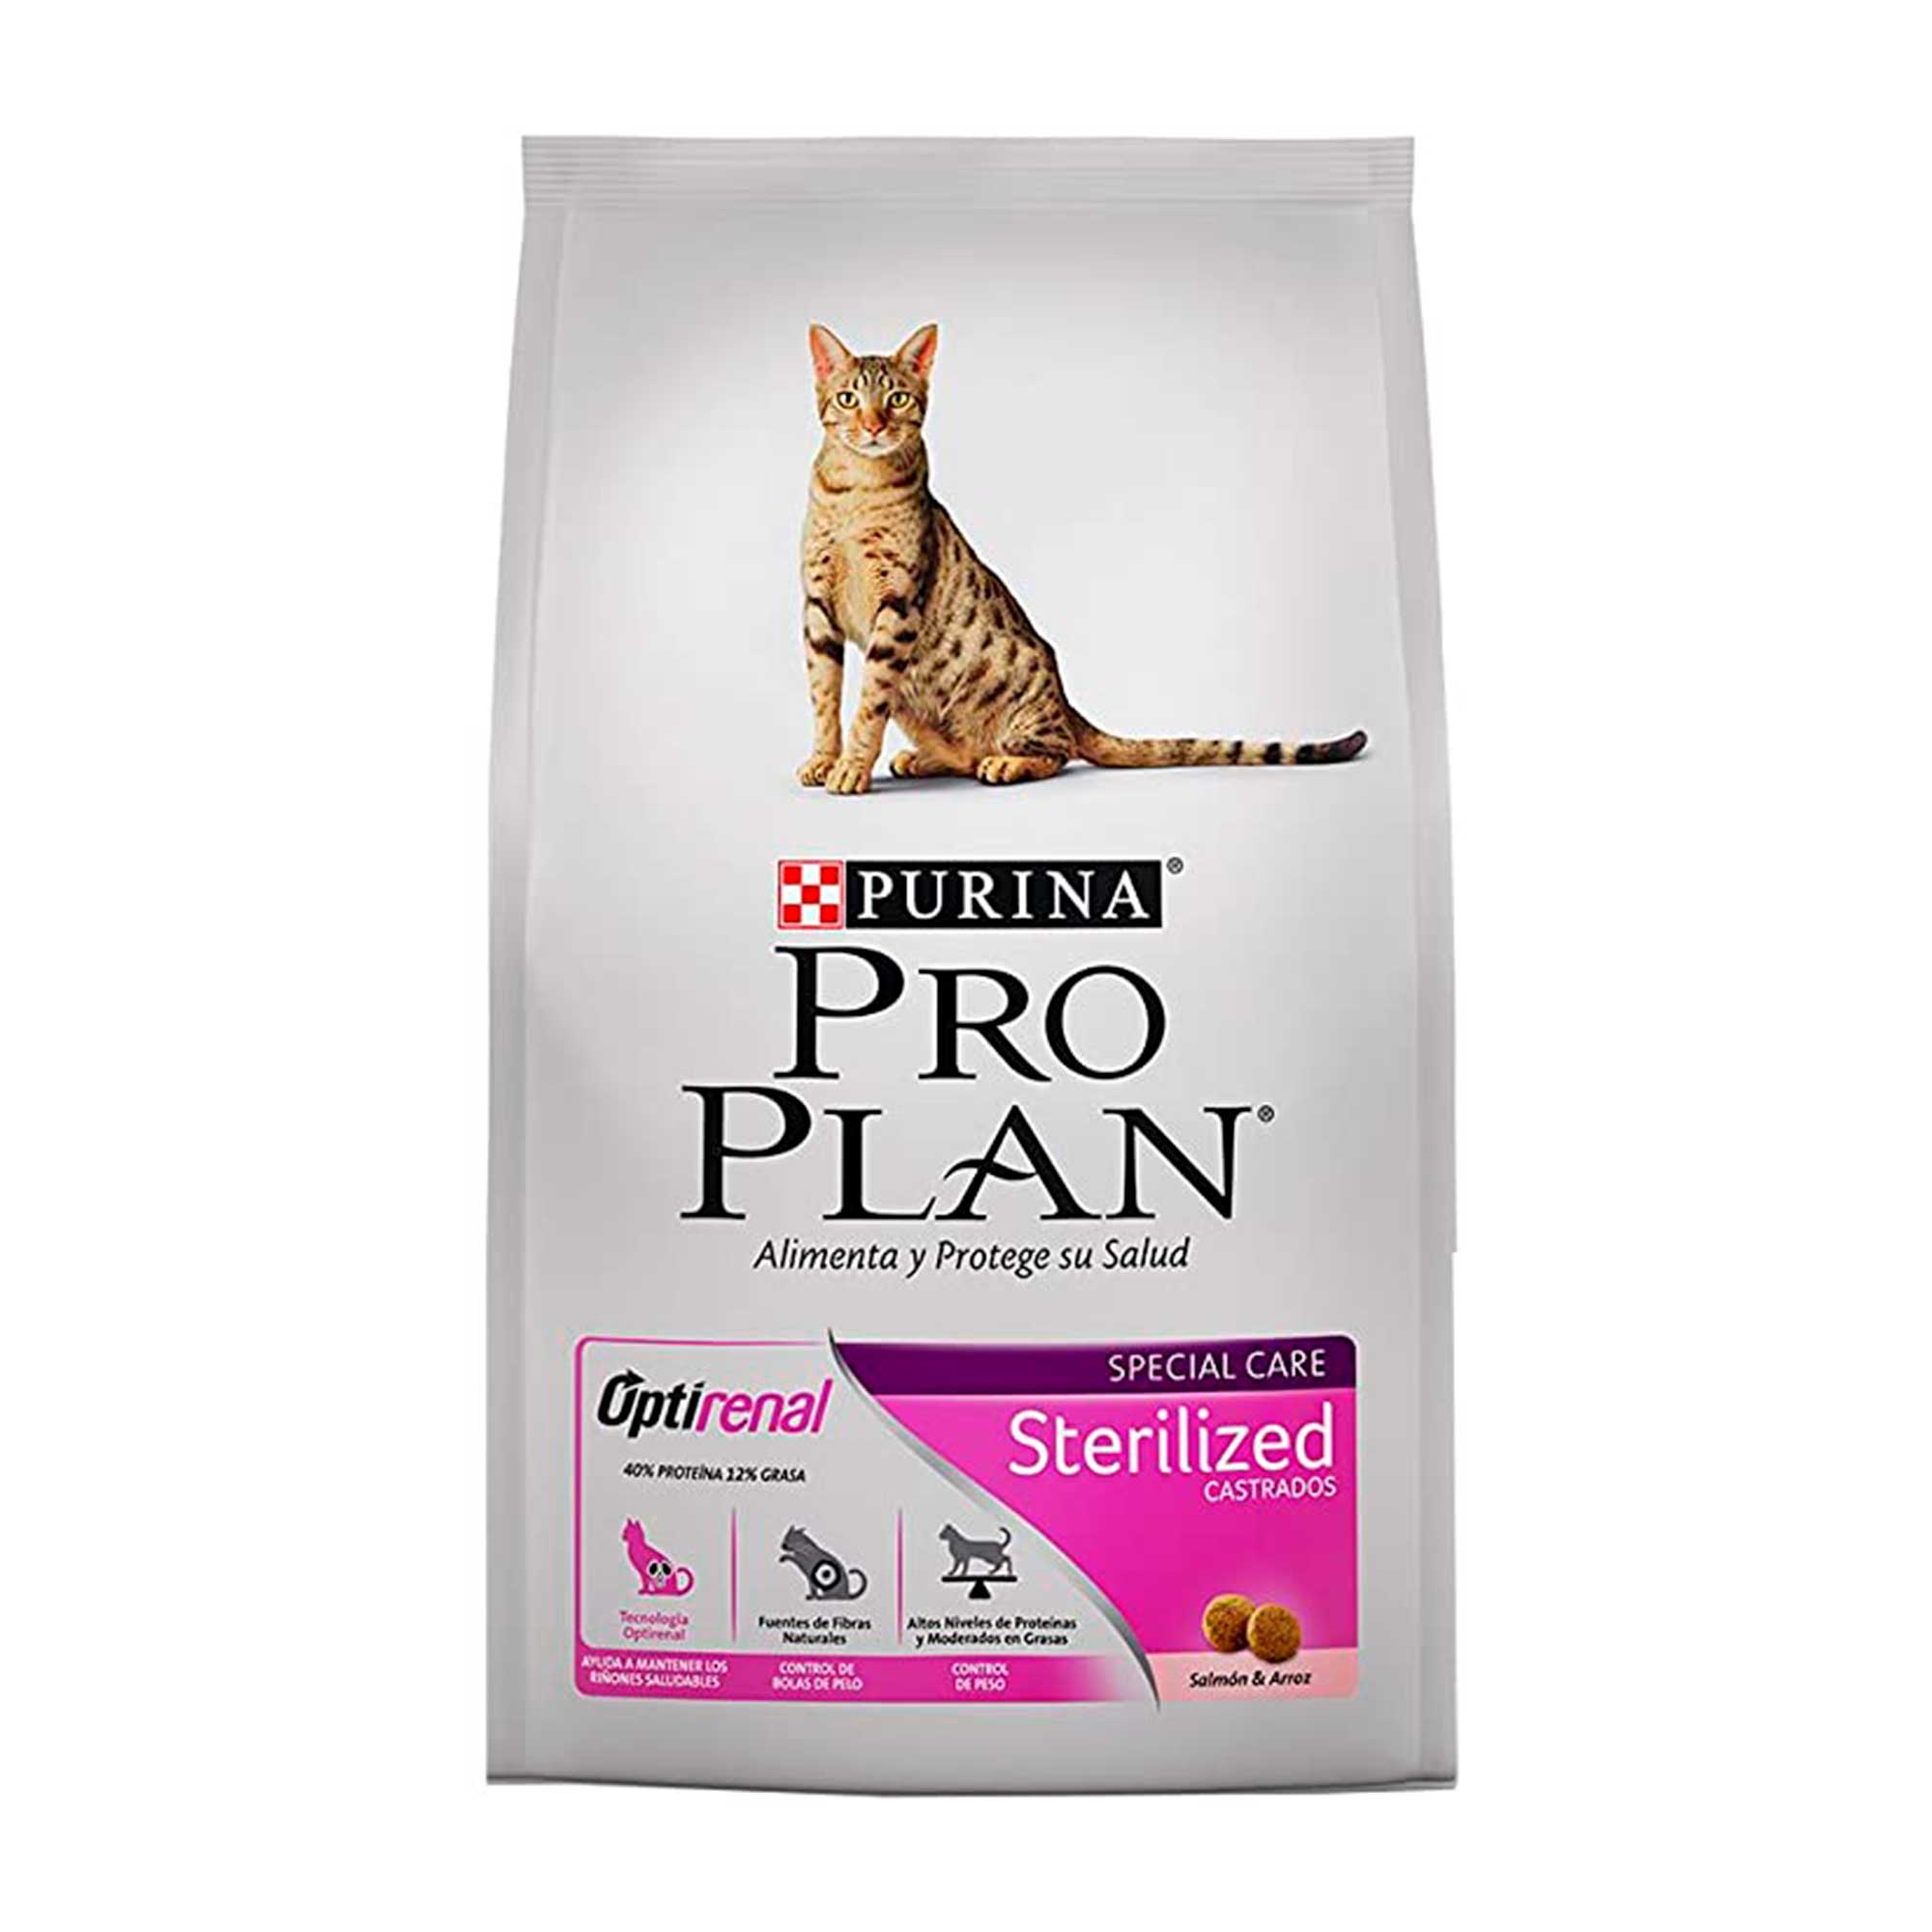 Purina pro plan для чувствительного пищеварения. Purina Pro Plan Sterilised Optirenal. Purina Pro Plan Sterilised Cat. Pro Plan Cat Sterilised. Пурина Проплан стерилизед.